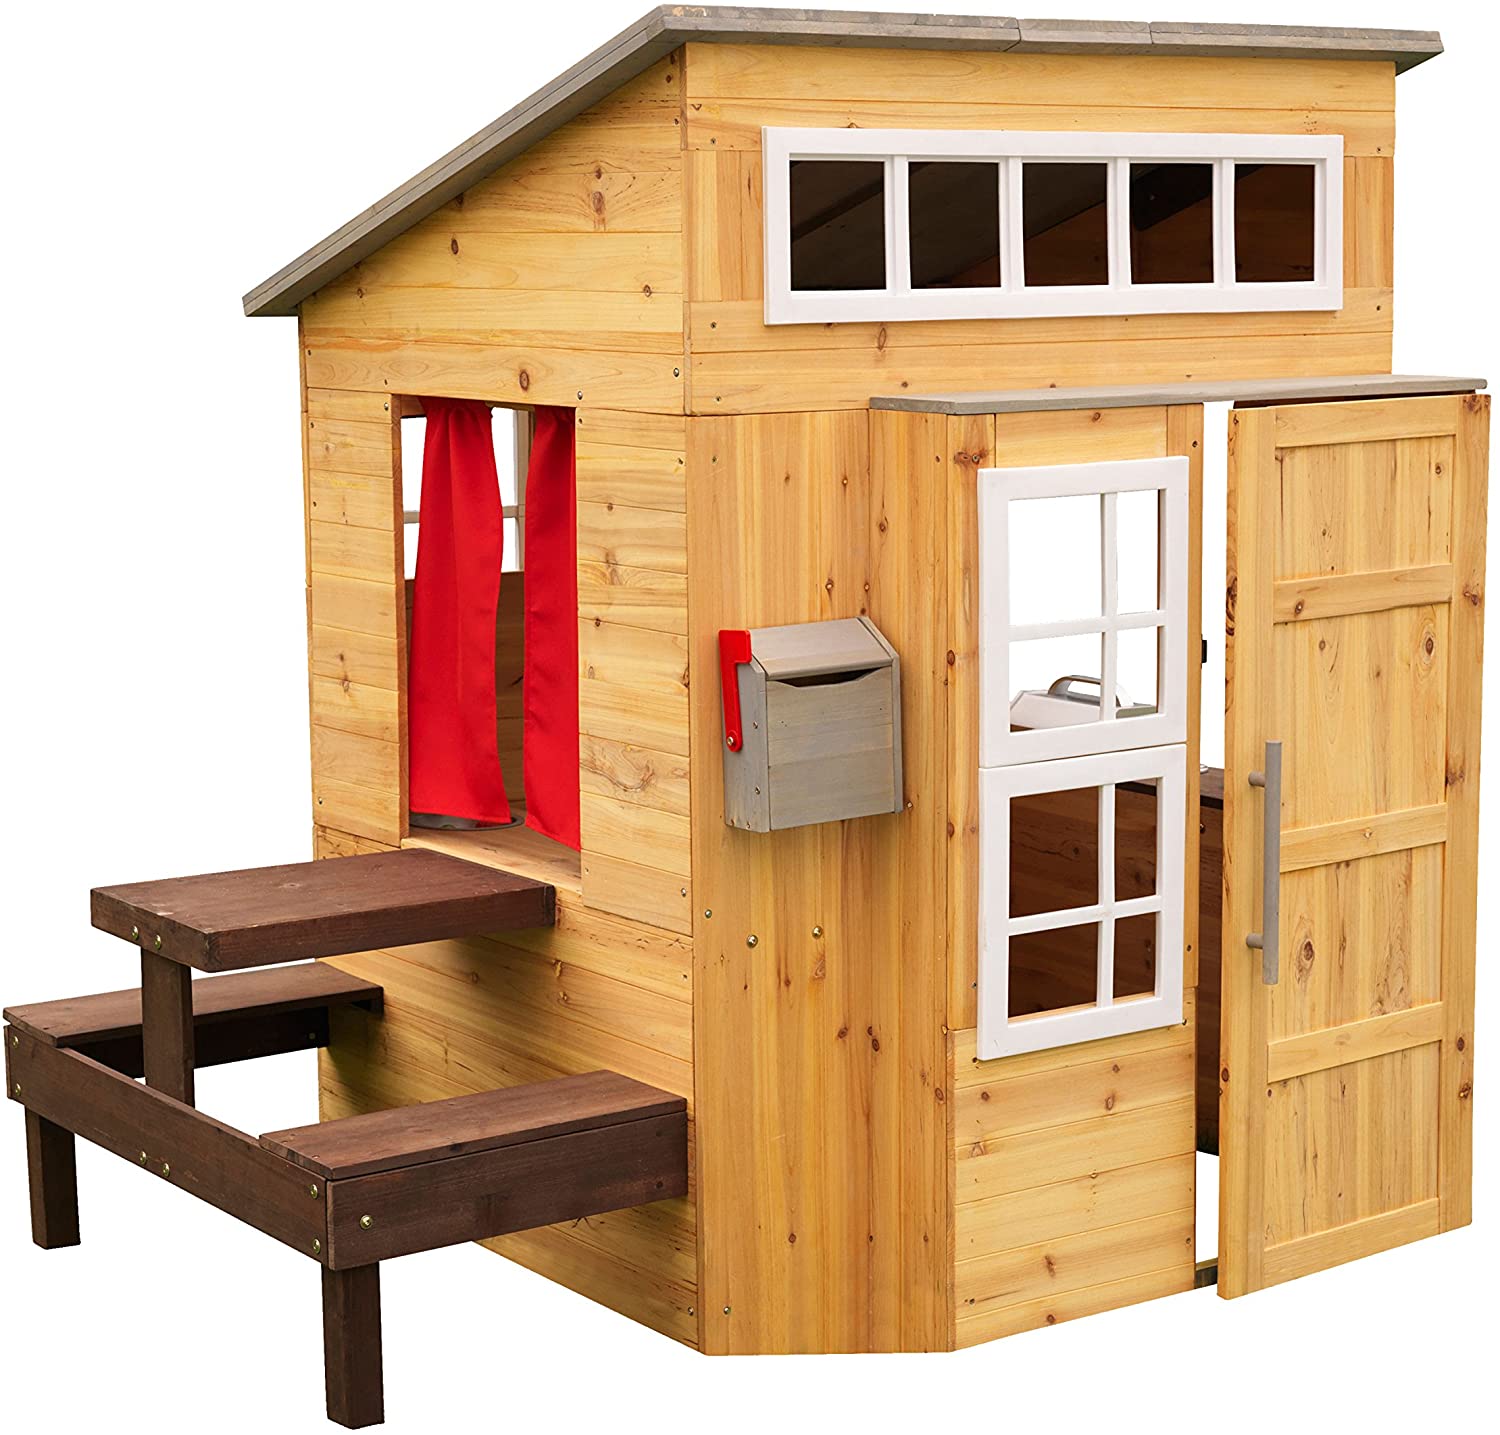 KidKraft Modern Outdoor Wooden Best Outdoor Playhouse